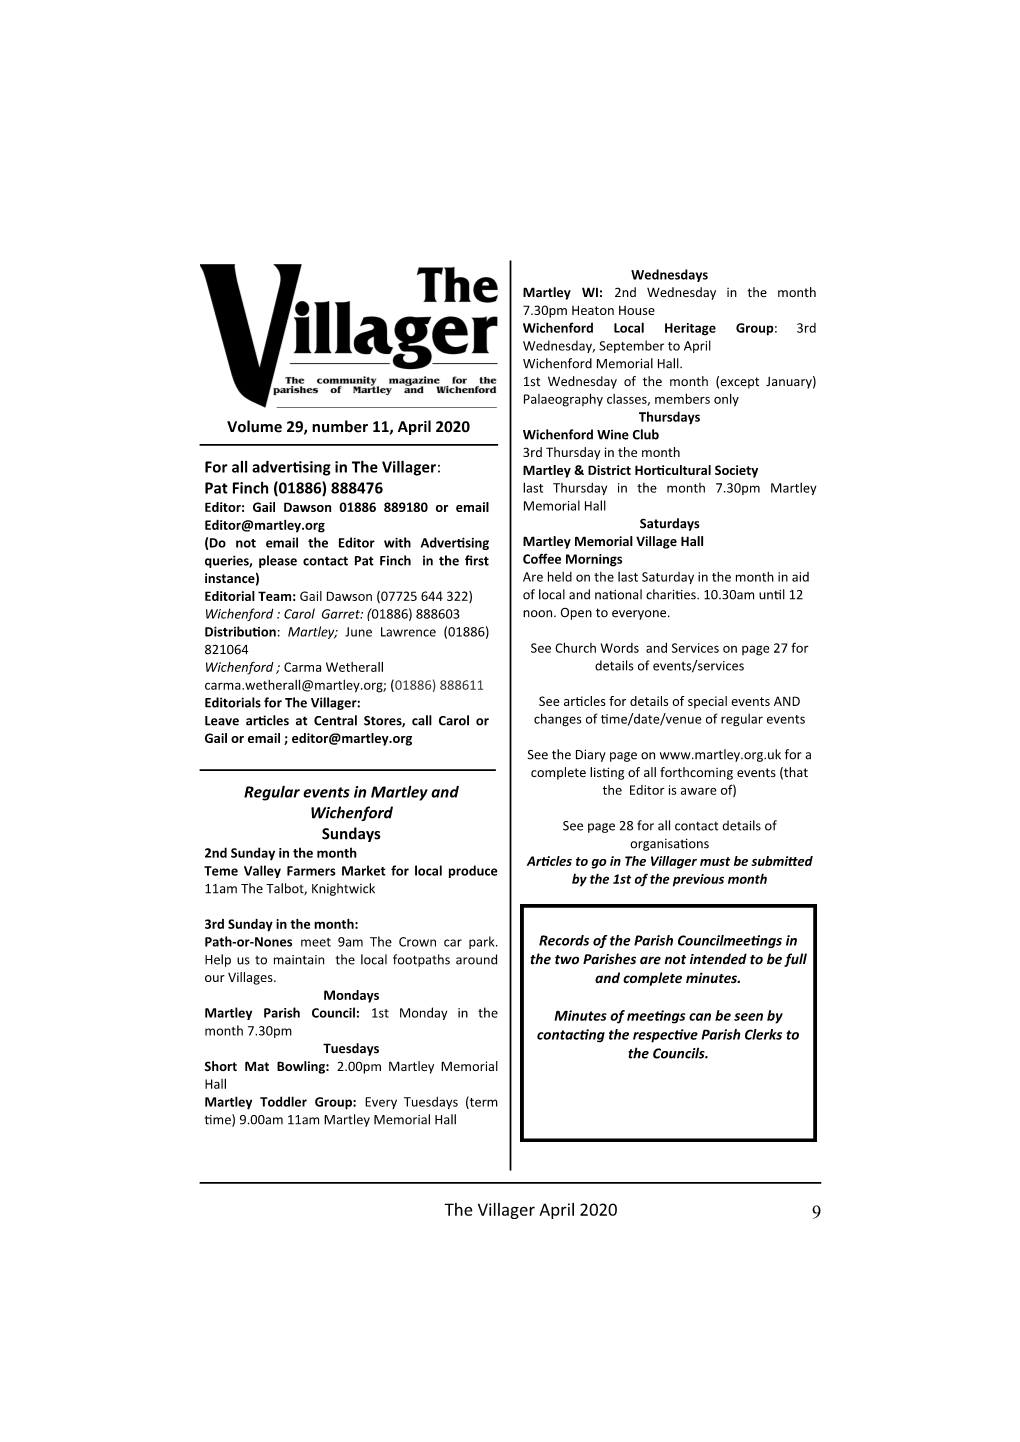 The Villager April 2020 9